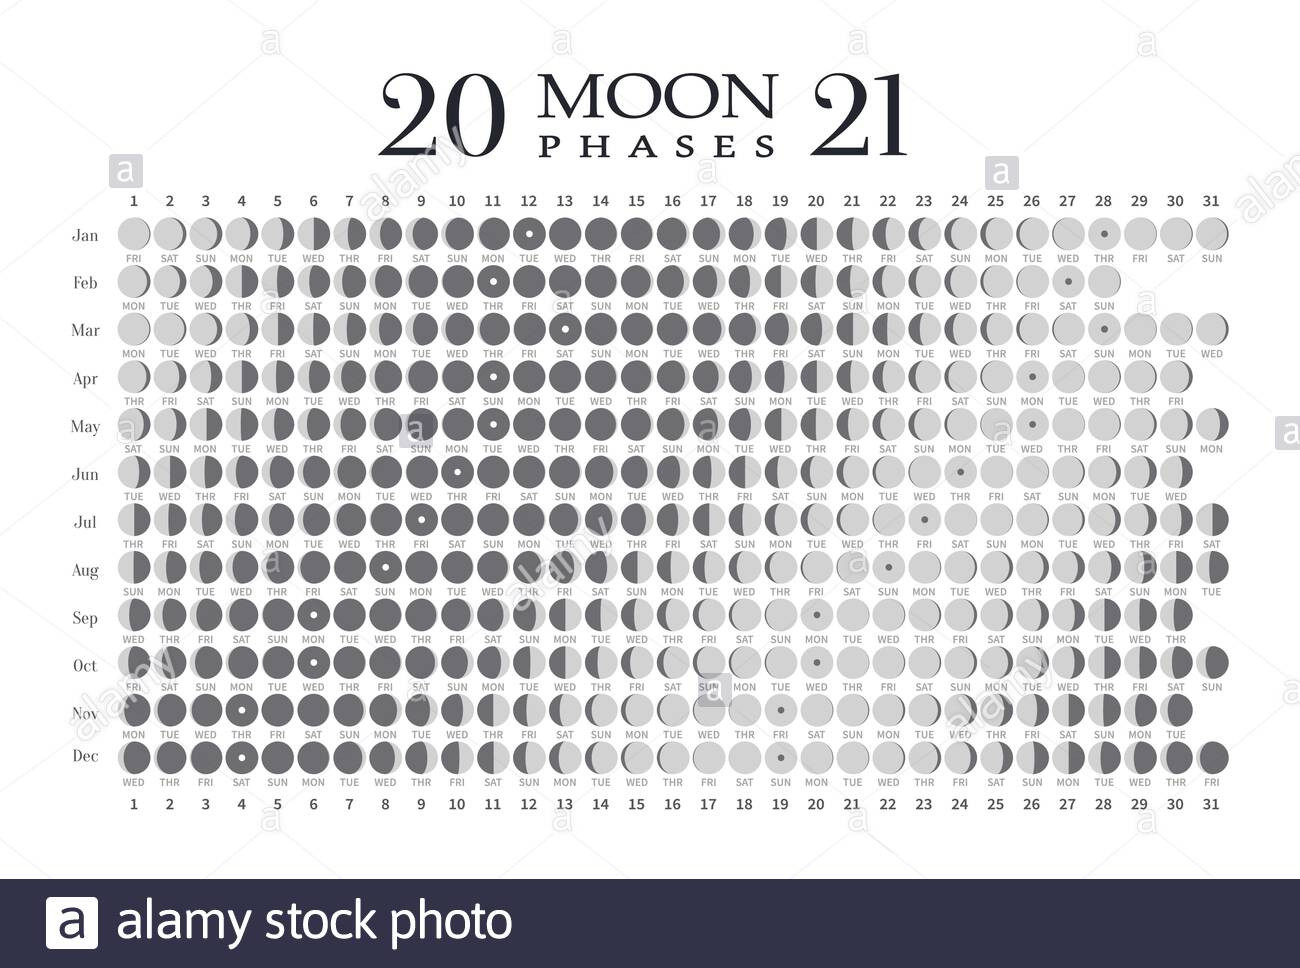 2021 Lunar Calendar | Printable Calendars 2021-Free Printable Moon Calender 2021